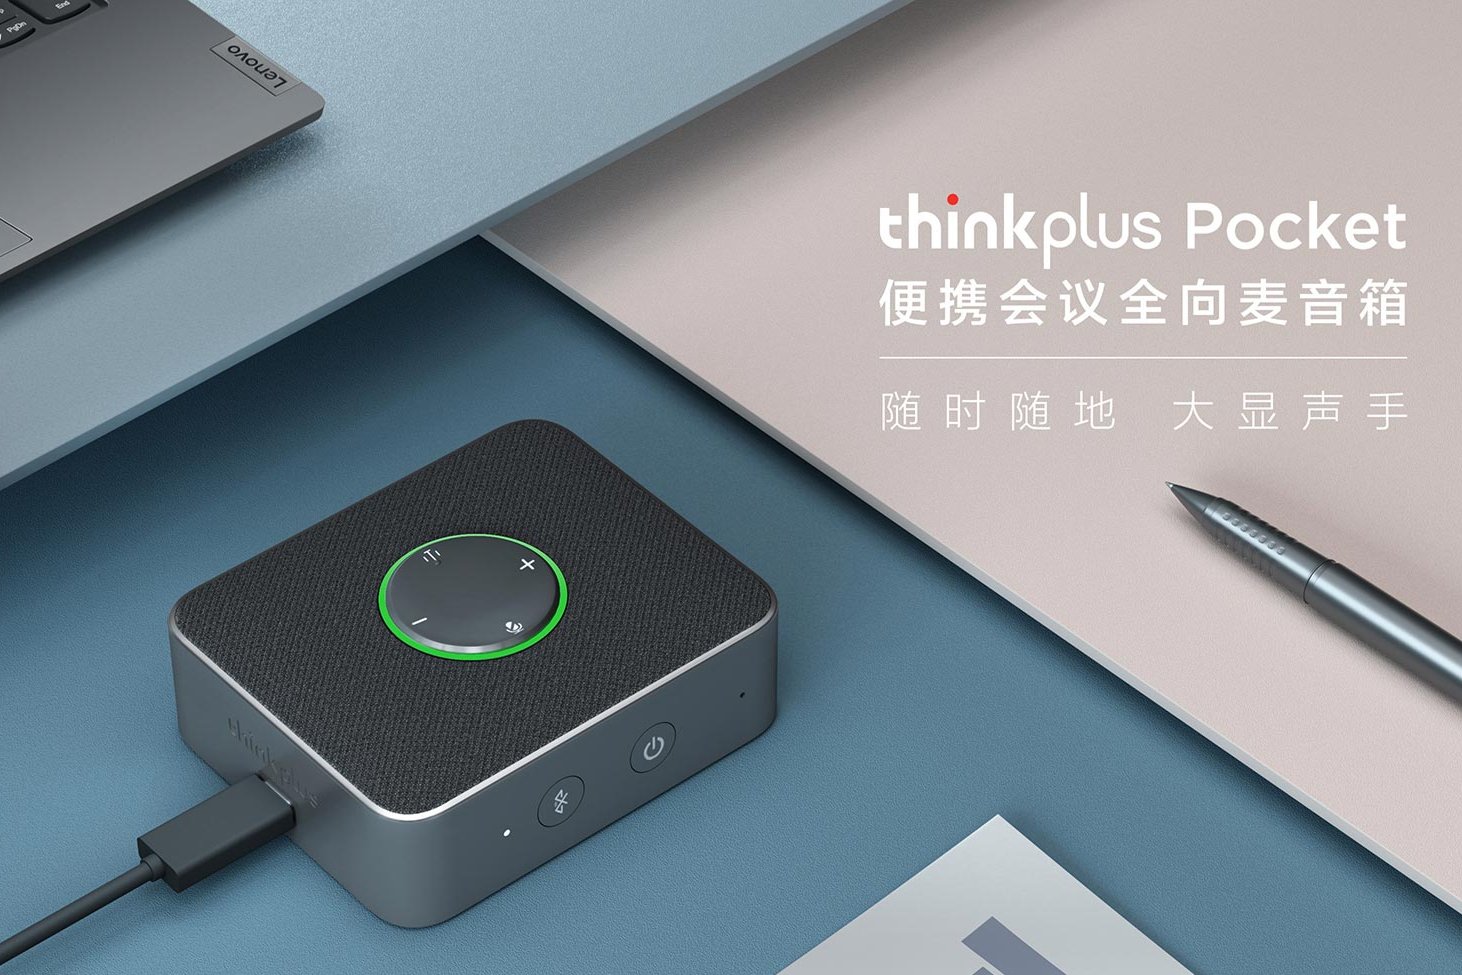 Lenovo thinkplus Pocket Portable Omnidirectional Microphone Speaker  launched in China - Gizmochina